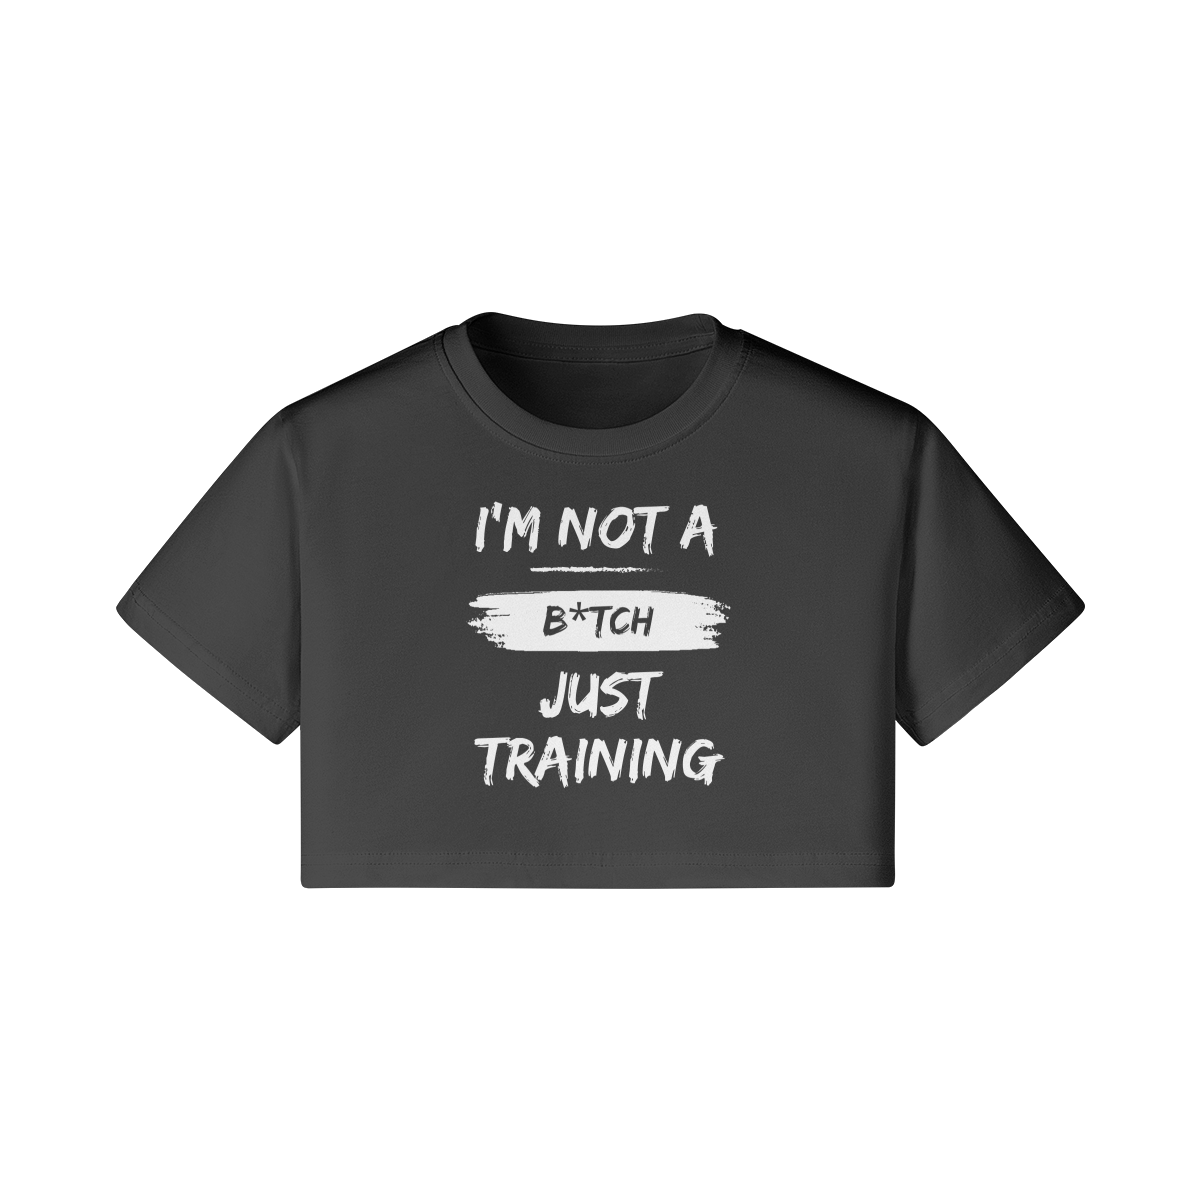 I'm not a B*tch just training